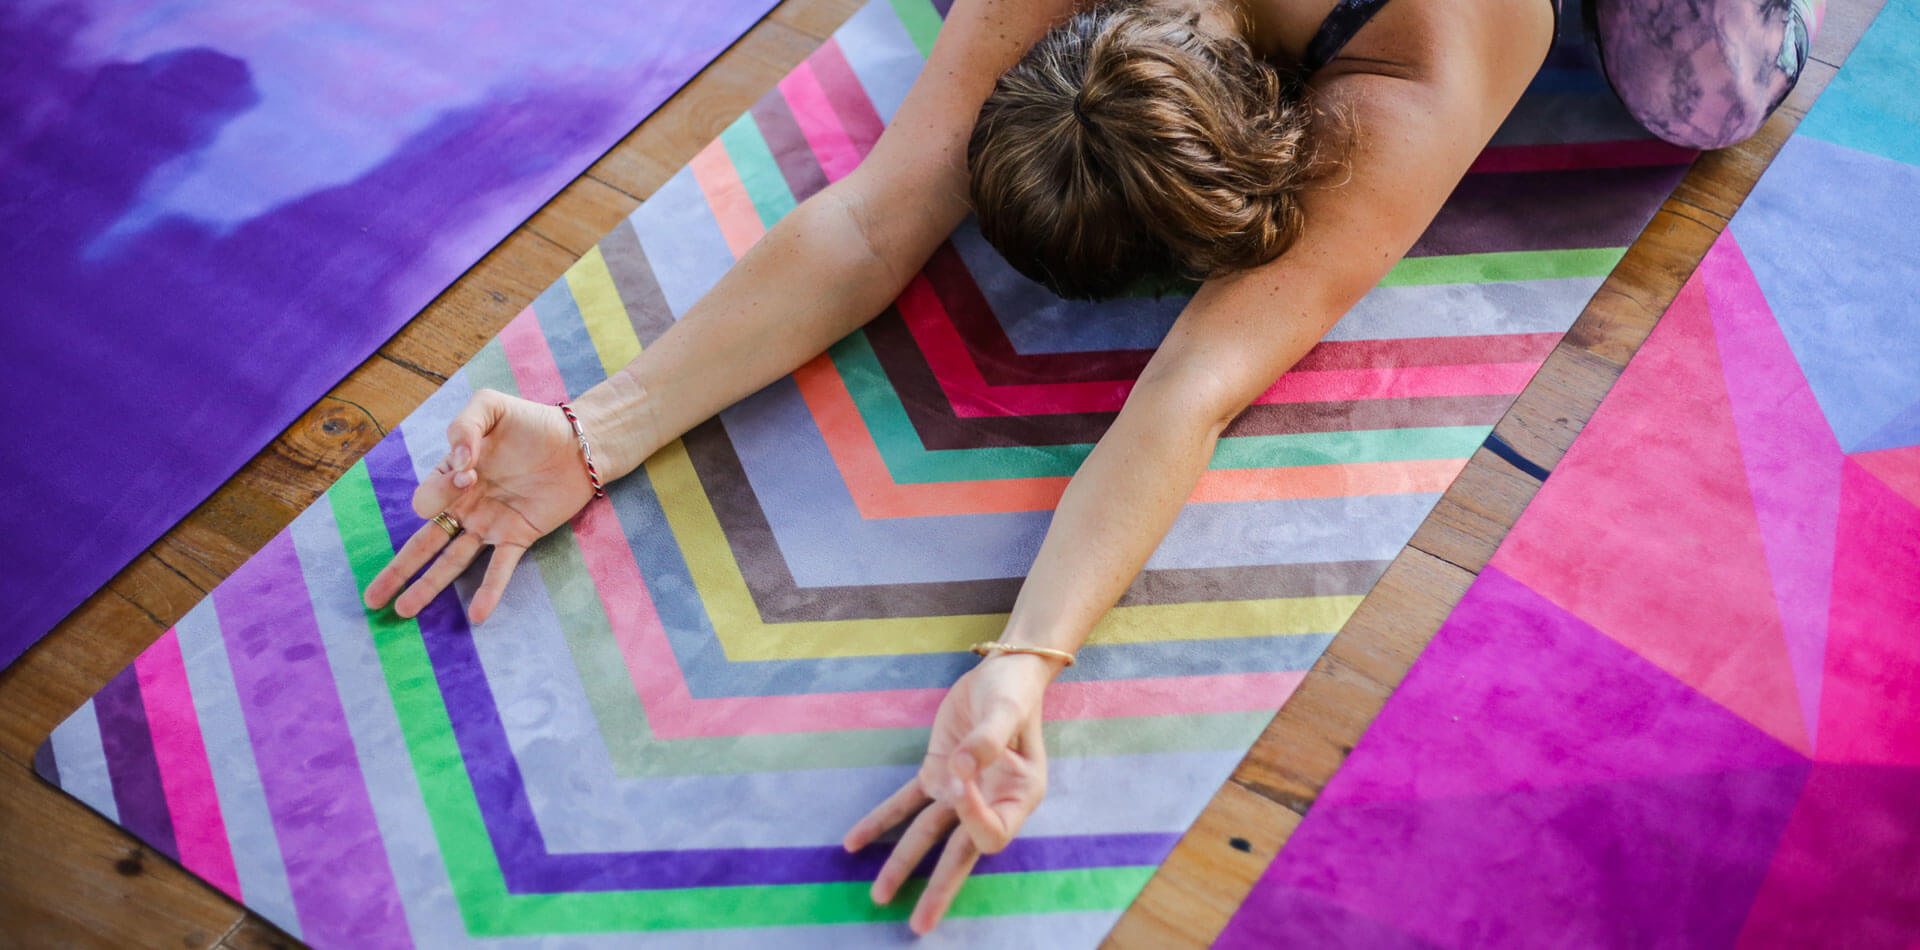 How should you choose a yoga mat? MindYoga4U